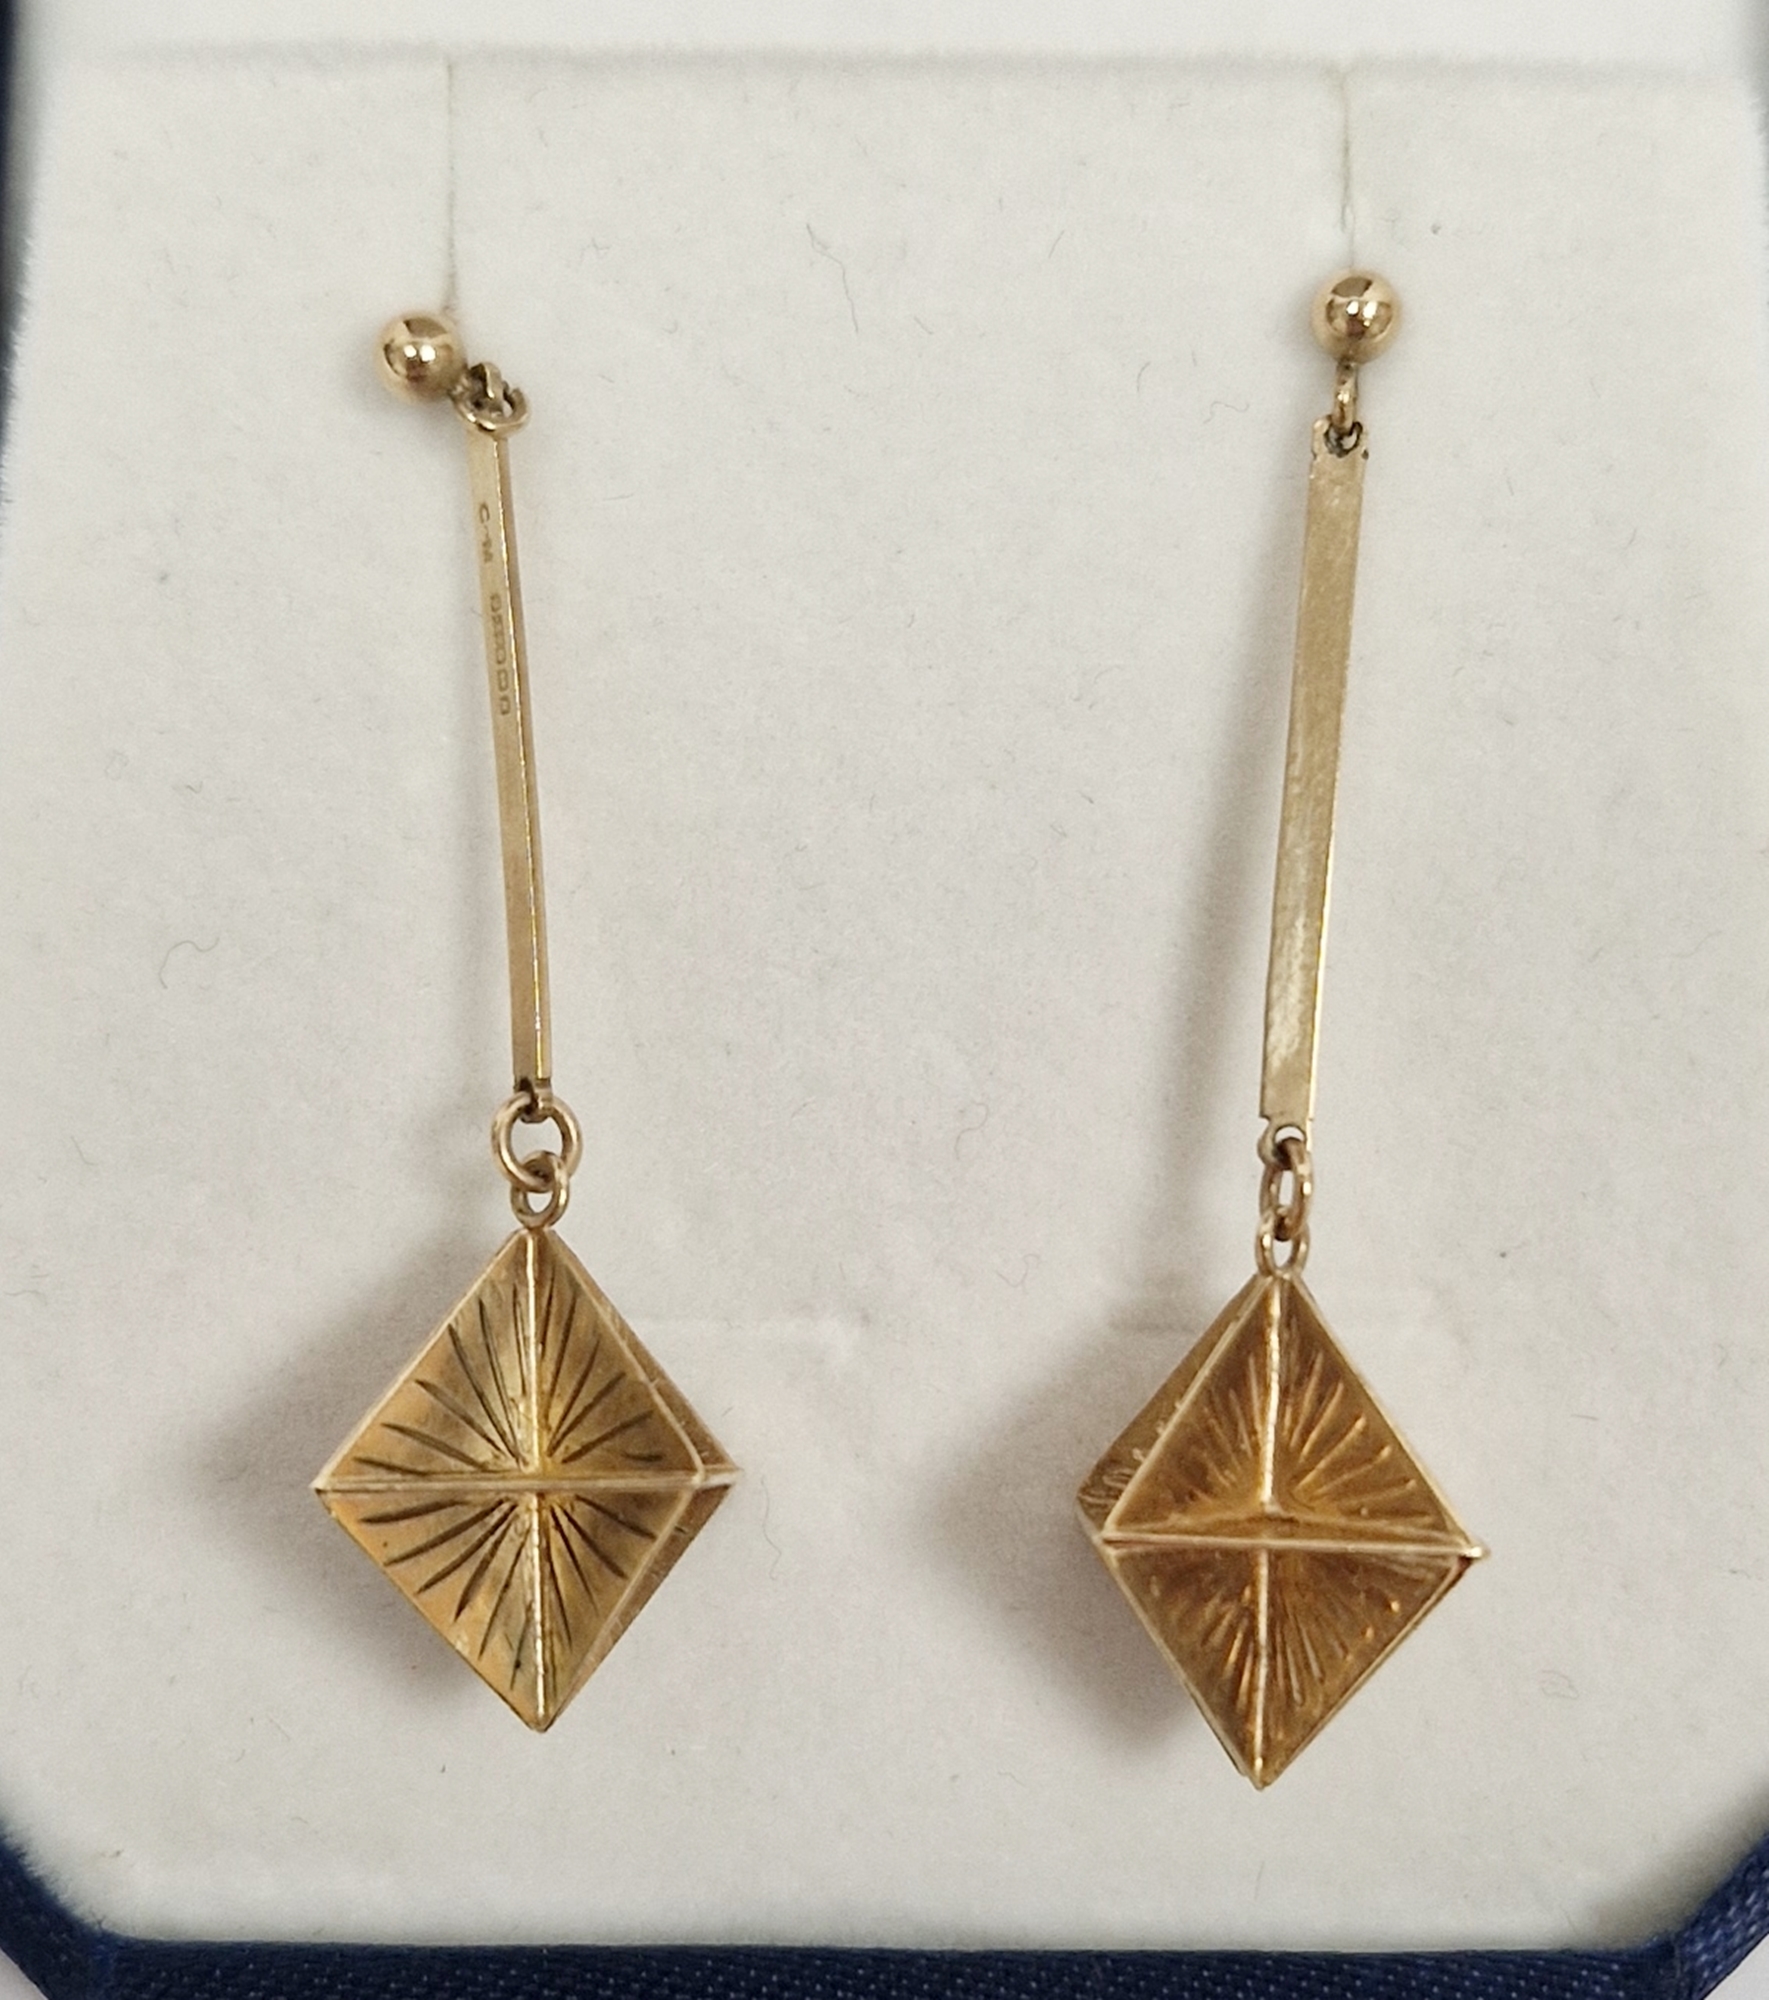 Pair 9ct gold pendant drop earrings, having trapezoid panel drop on plain bar, approx 3.7g